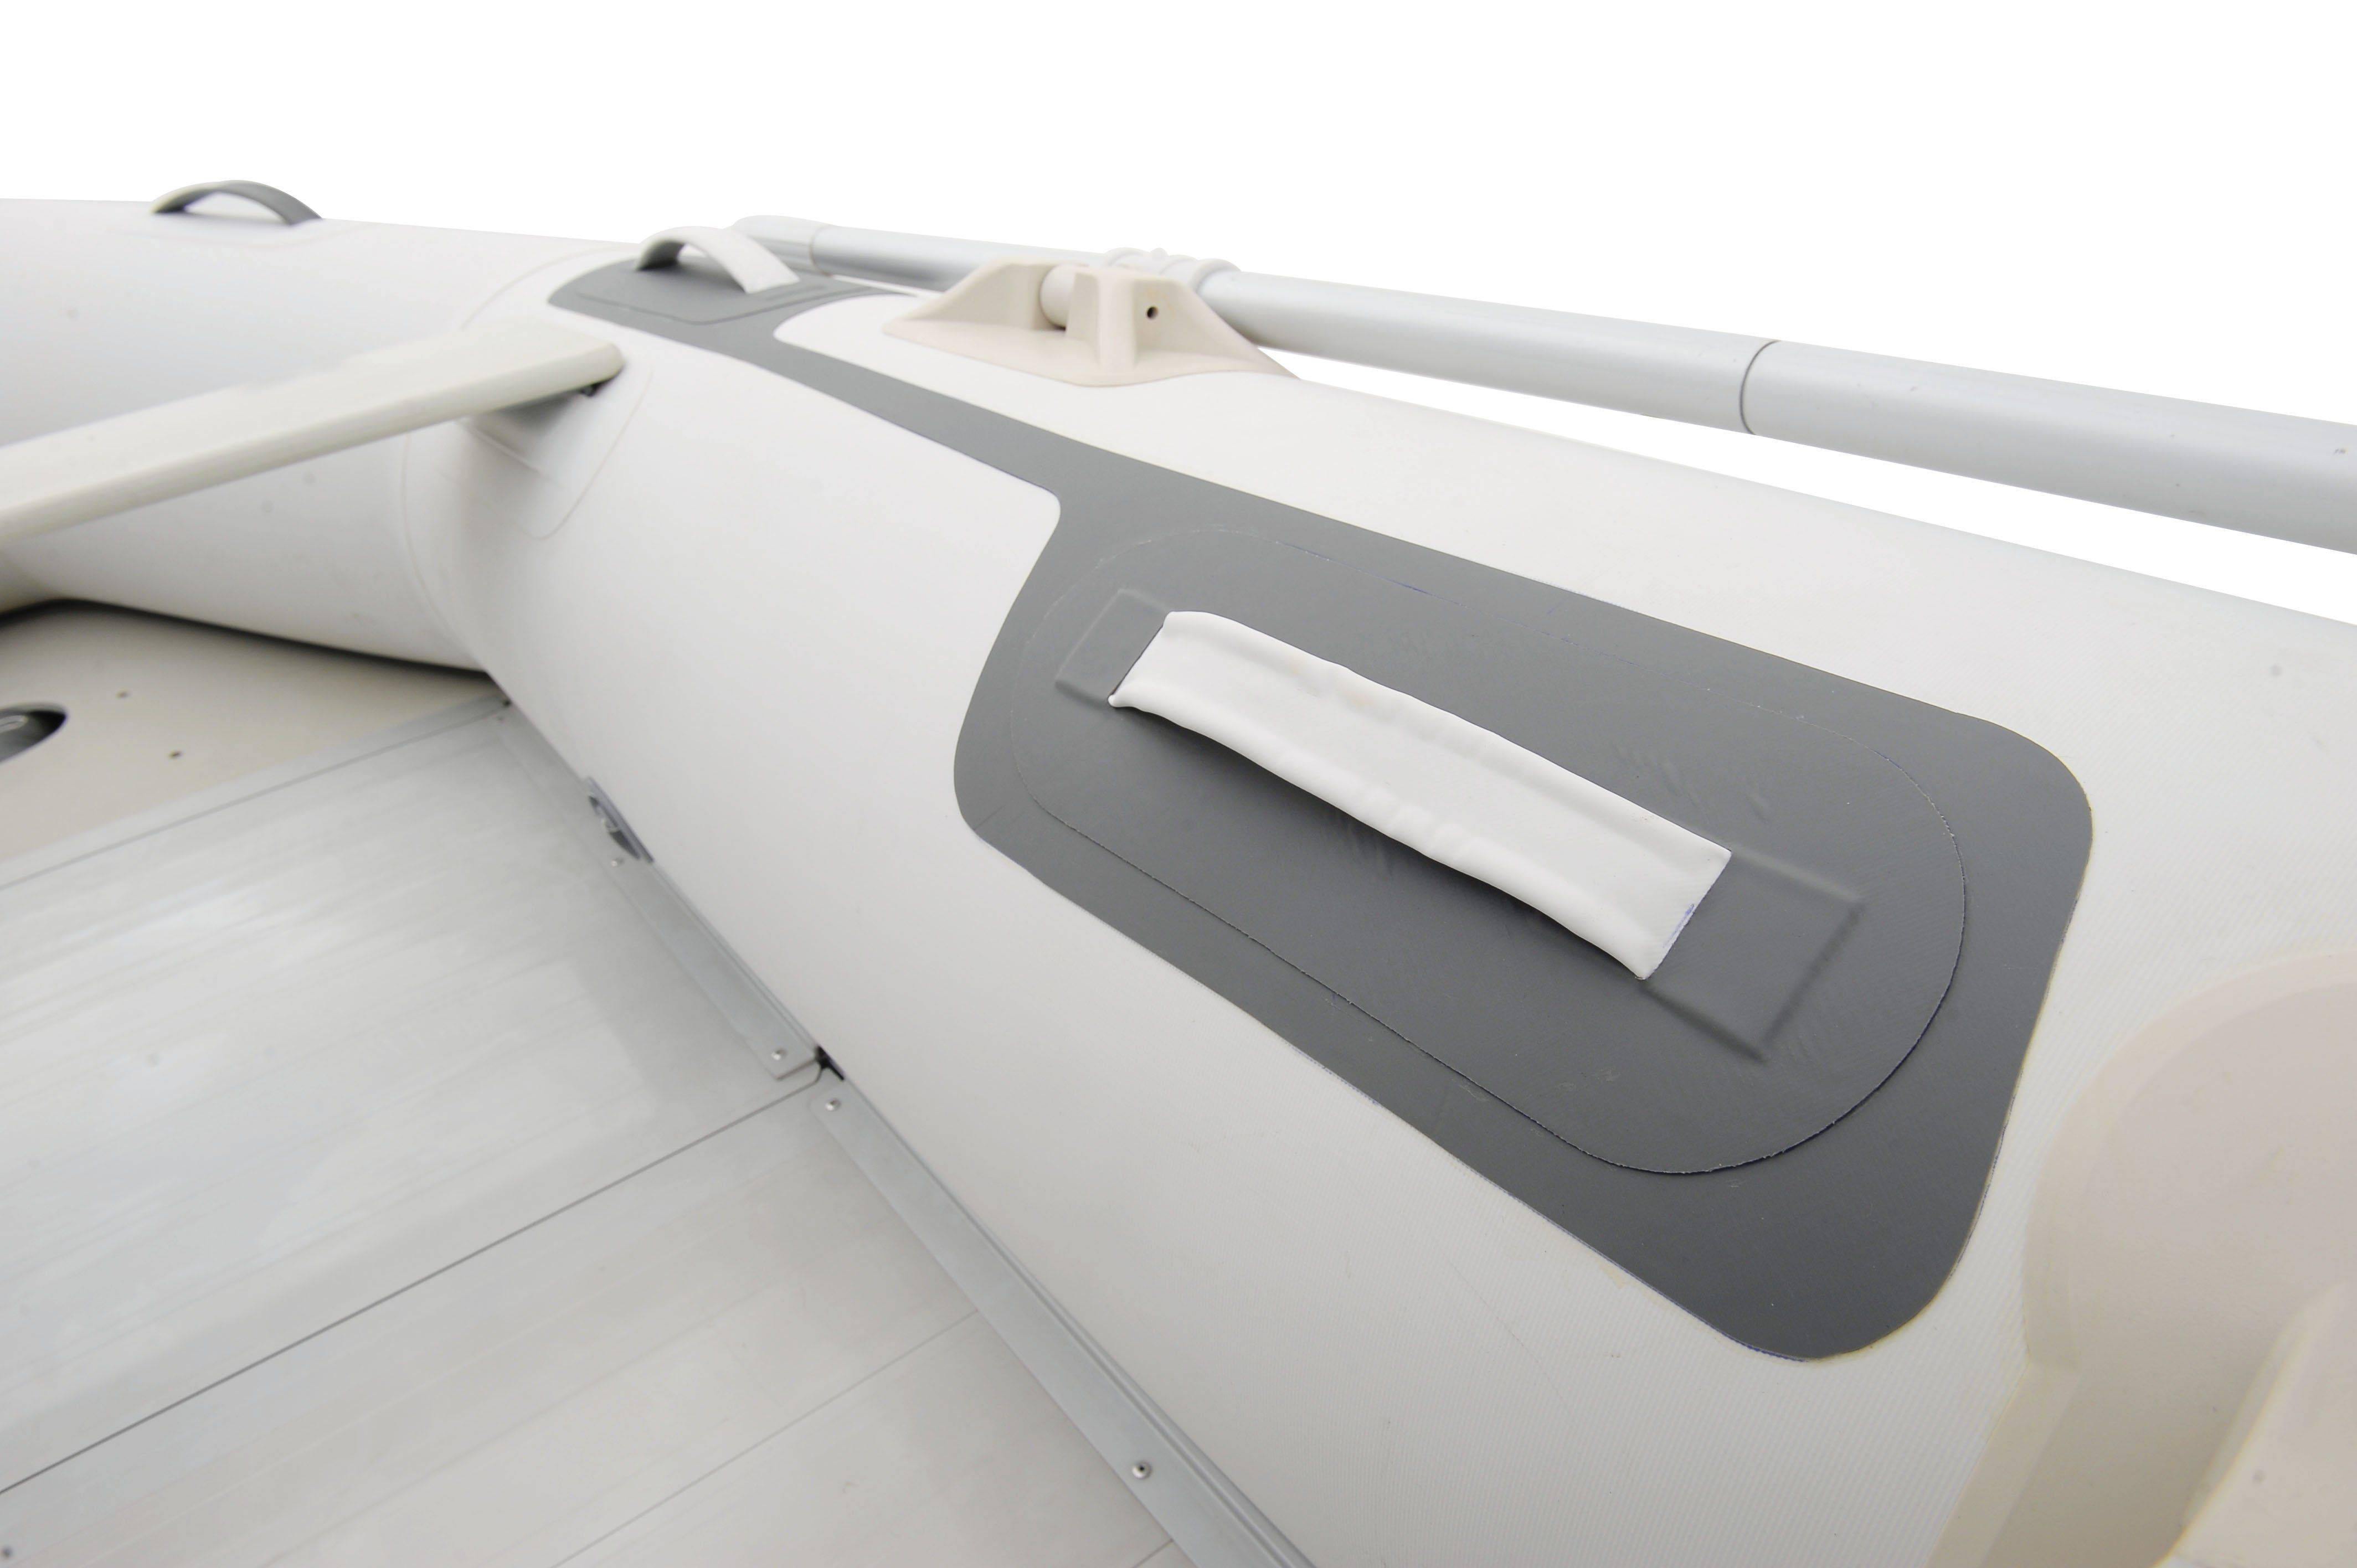 Aqua Marina Deluxe Inflatable Speed Boat - DTI Direct Canada